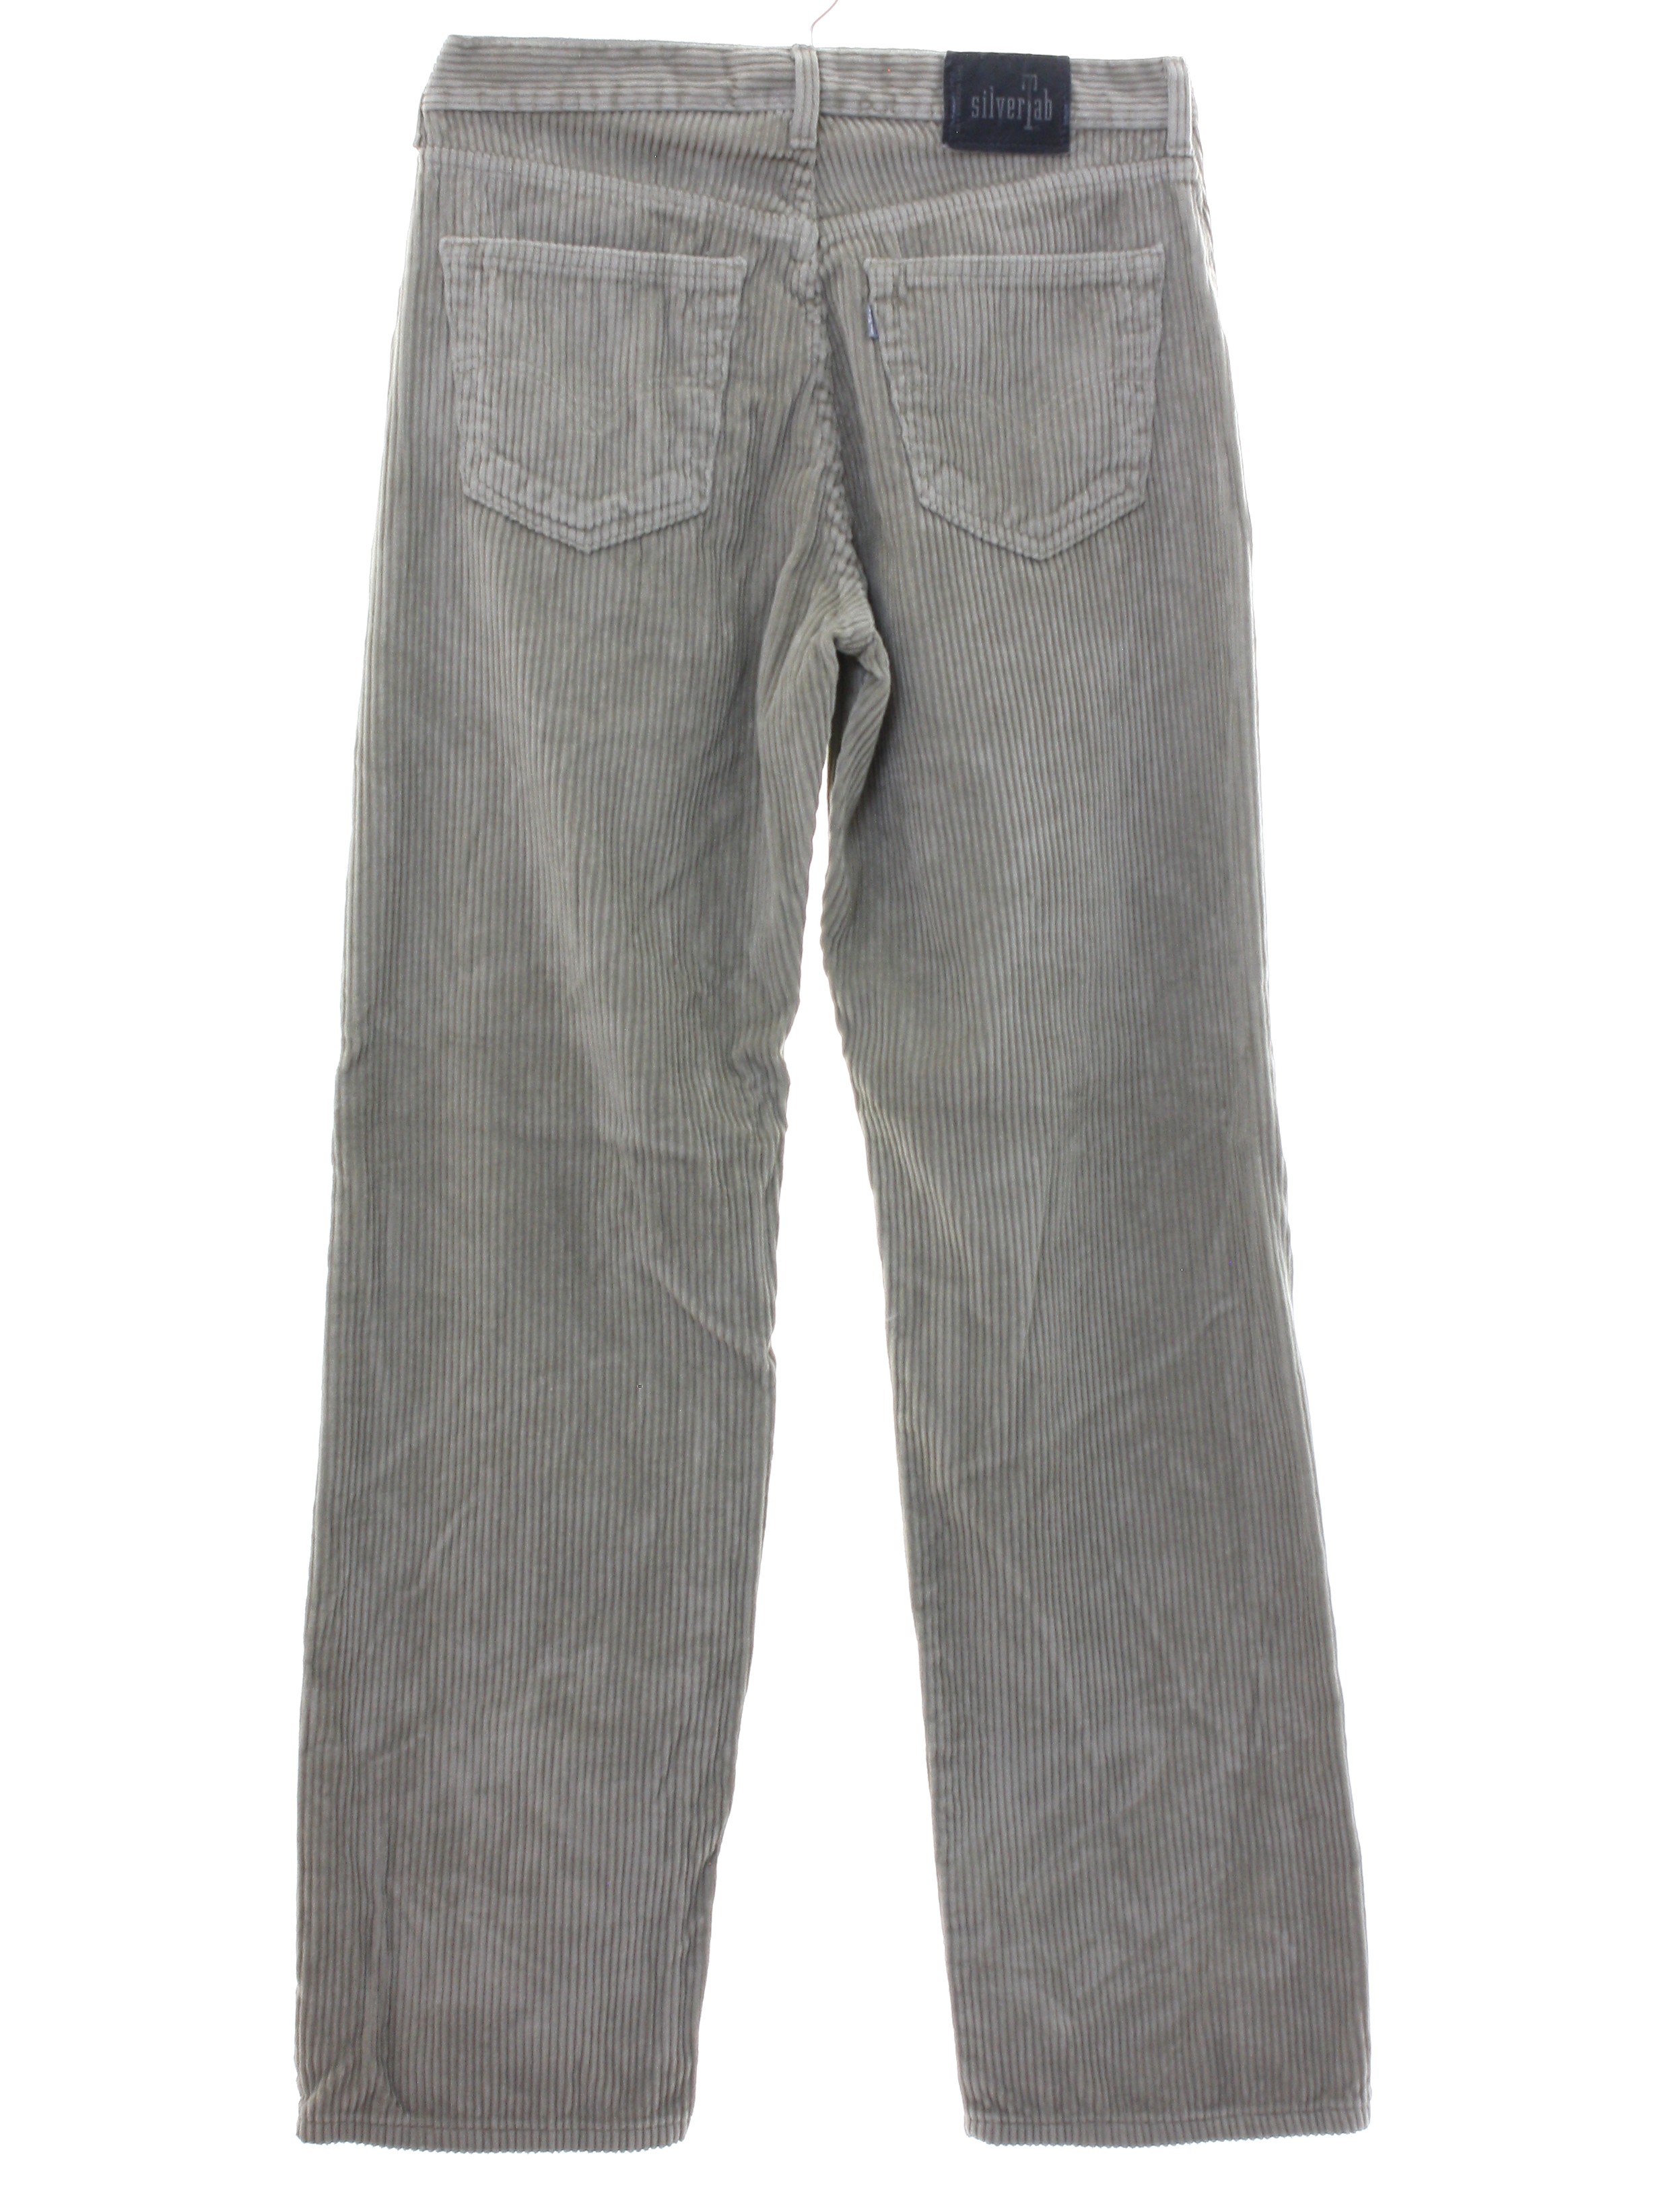 Vintage 1990's Pants: 90s -Levis SilverTab- Mens khaki tan cotton 